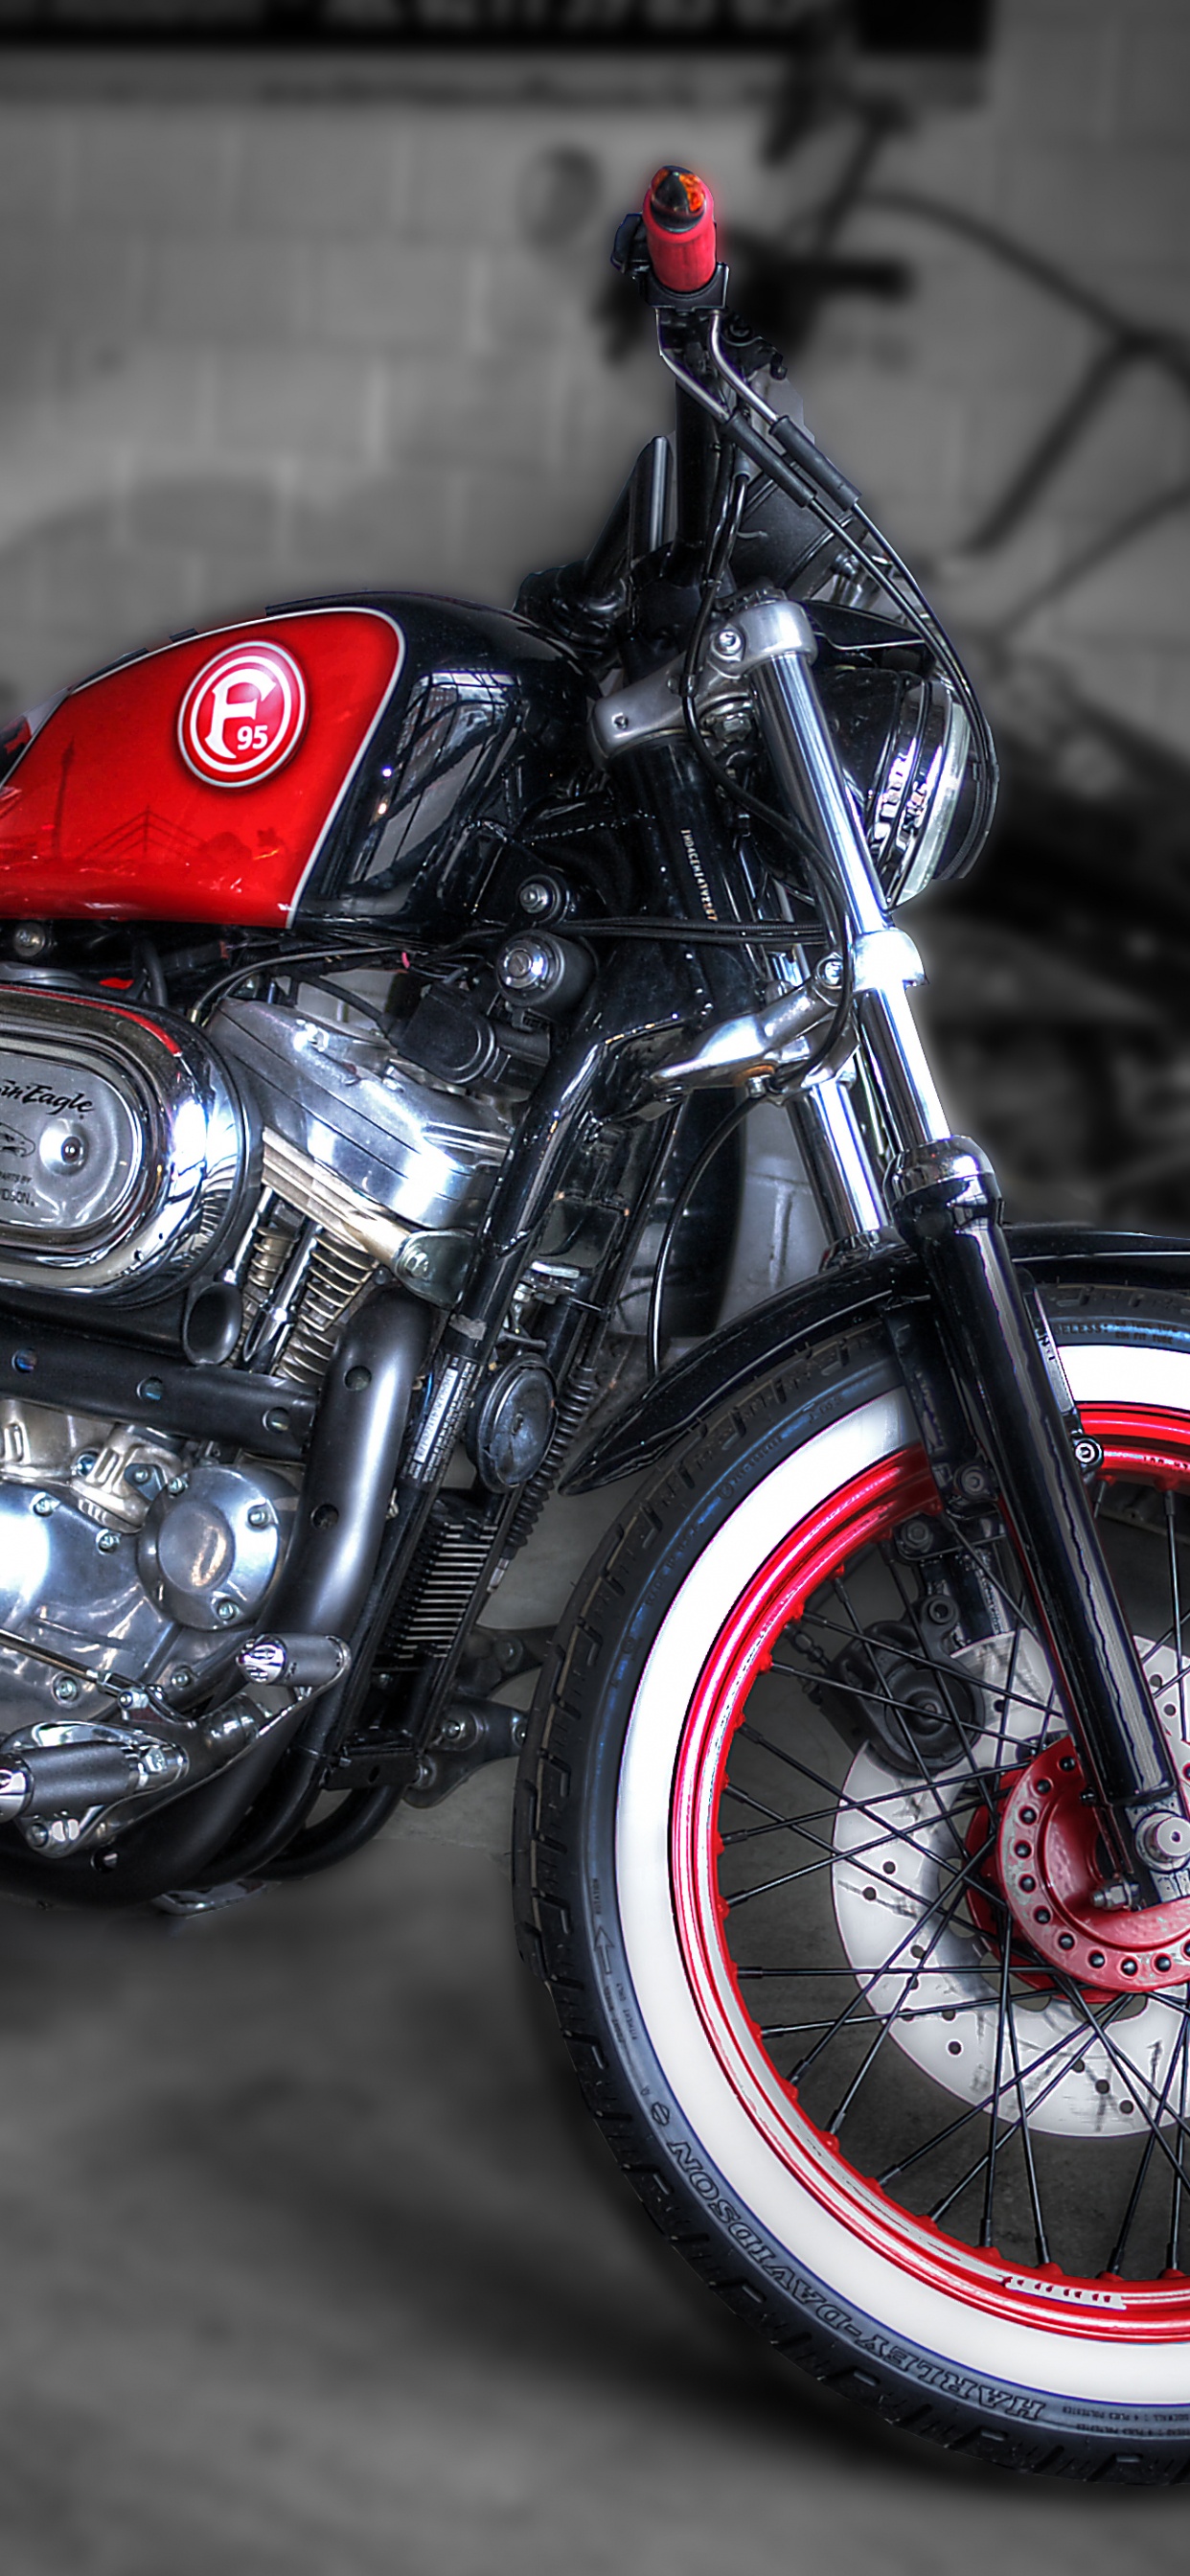 Motocicleta Cruiser Roja y Negra. Wallpaper in 1242x2688 Resolution